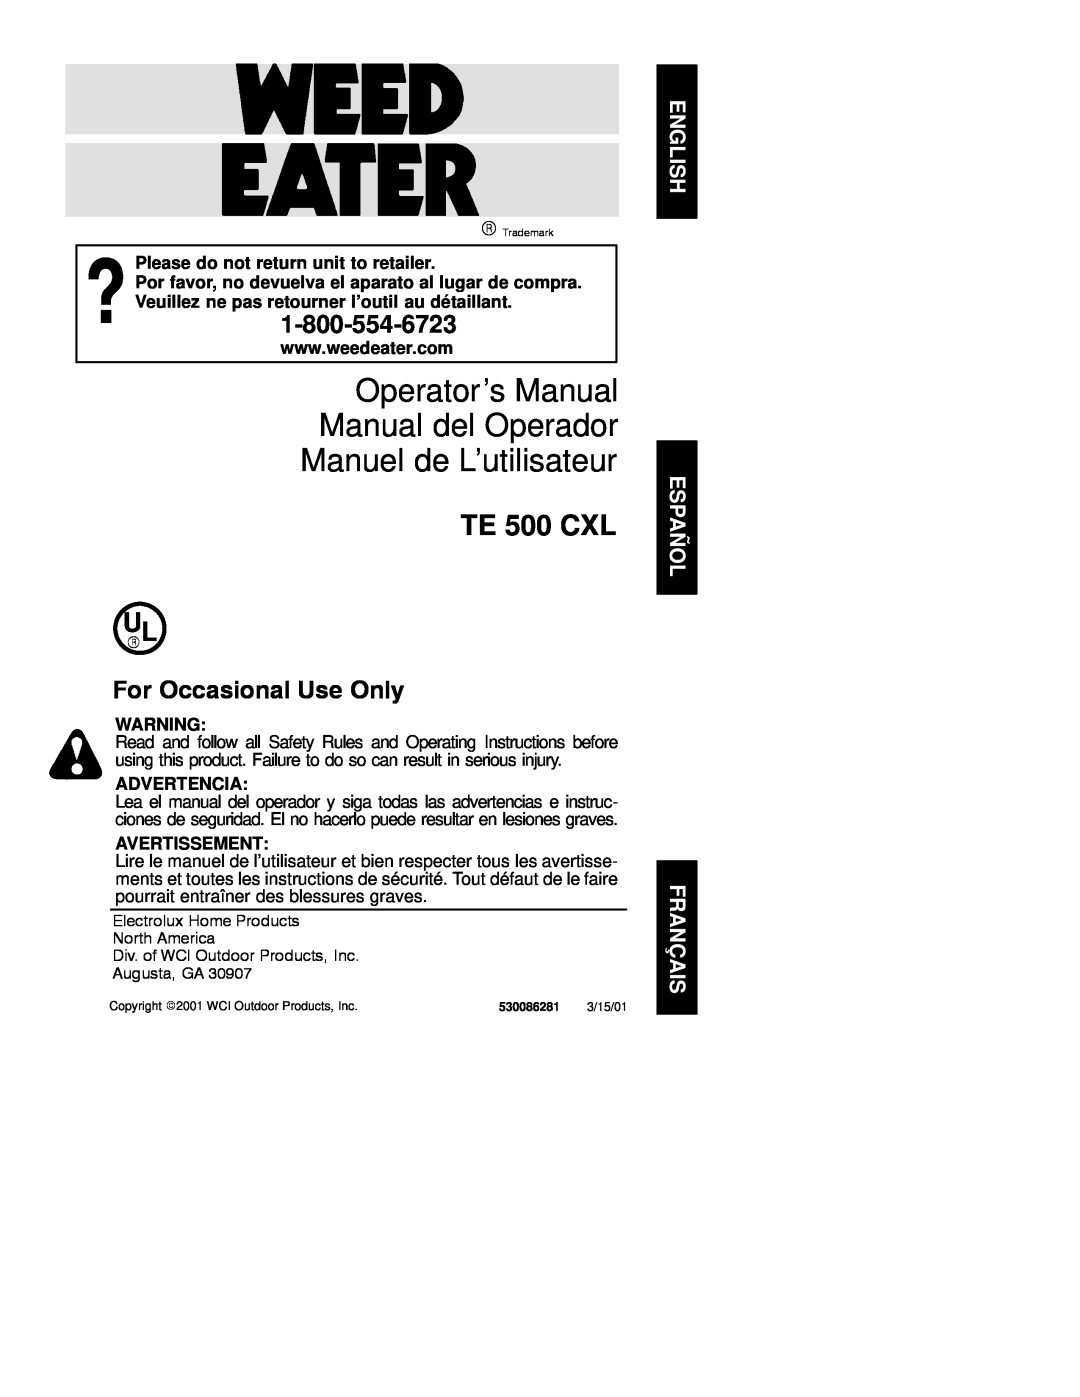 Weed Eater 530086281 manual Operator’s Manual Manual del Operador Manuel de L’utilisateur, TE 500 CXL, Advertencia 